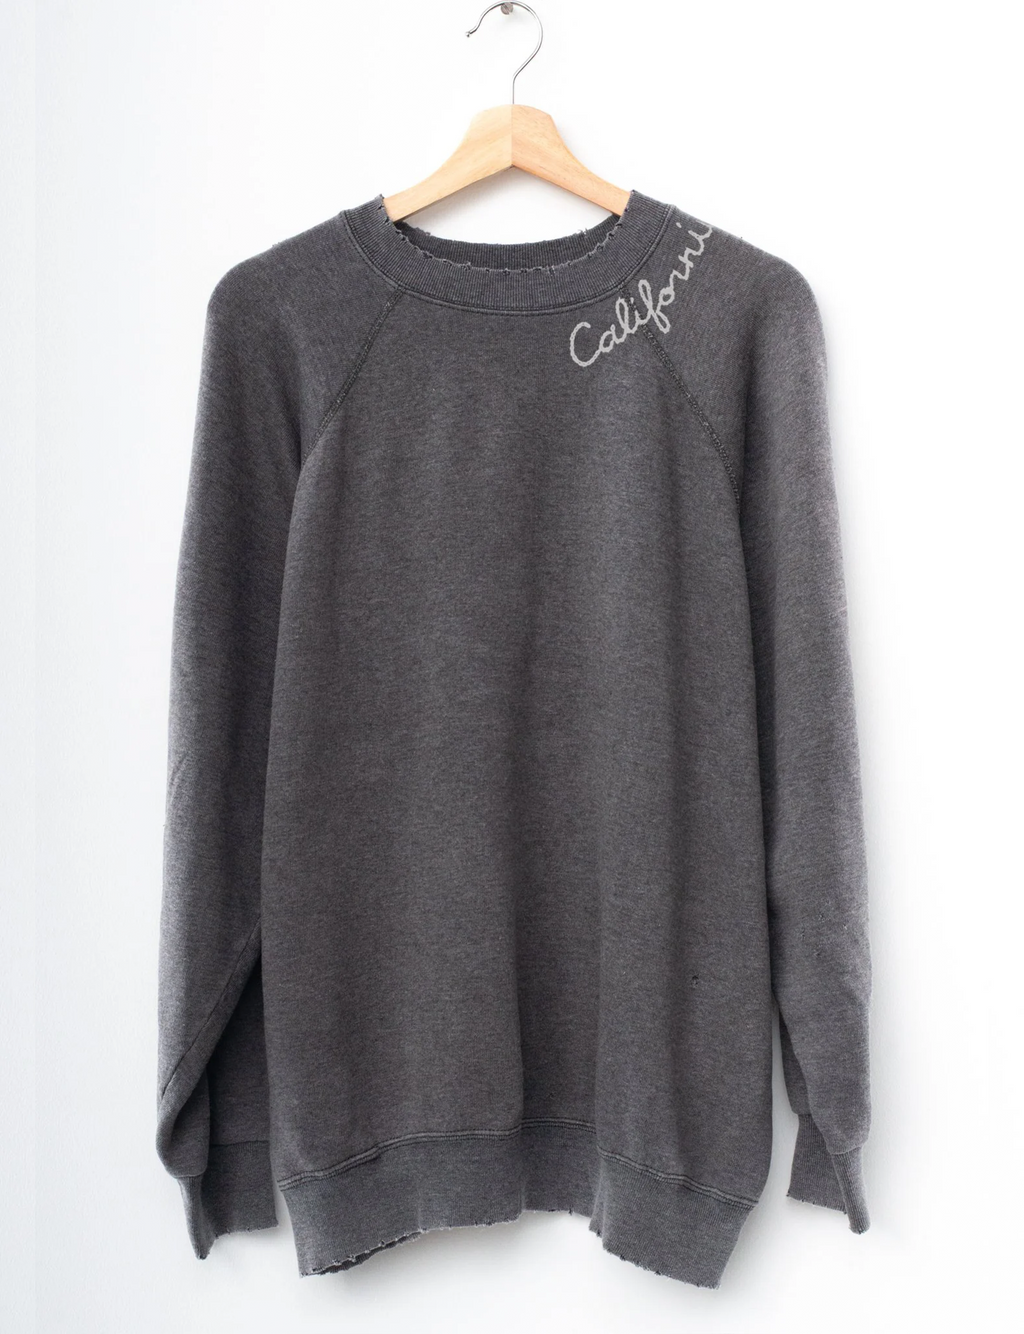 California Embroidered Crewneck Sweatshirt, Black/Grey